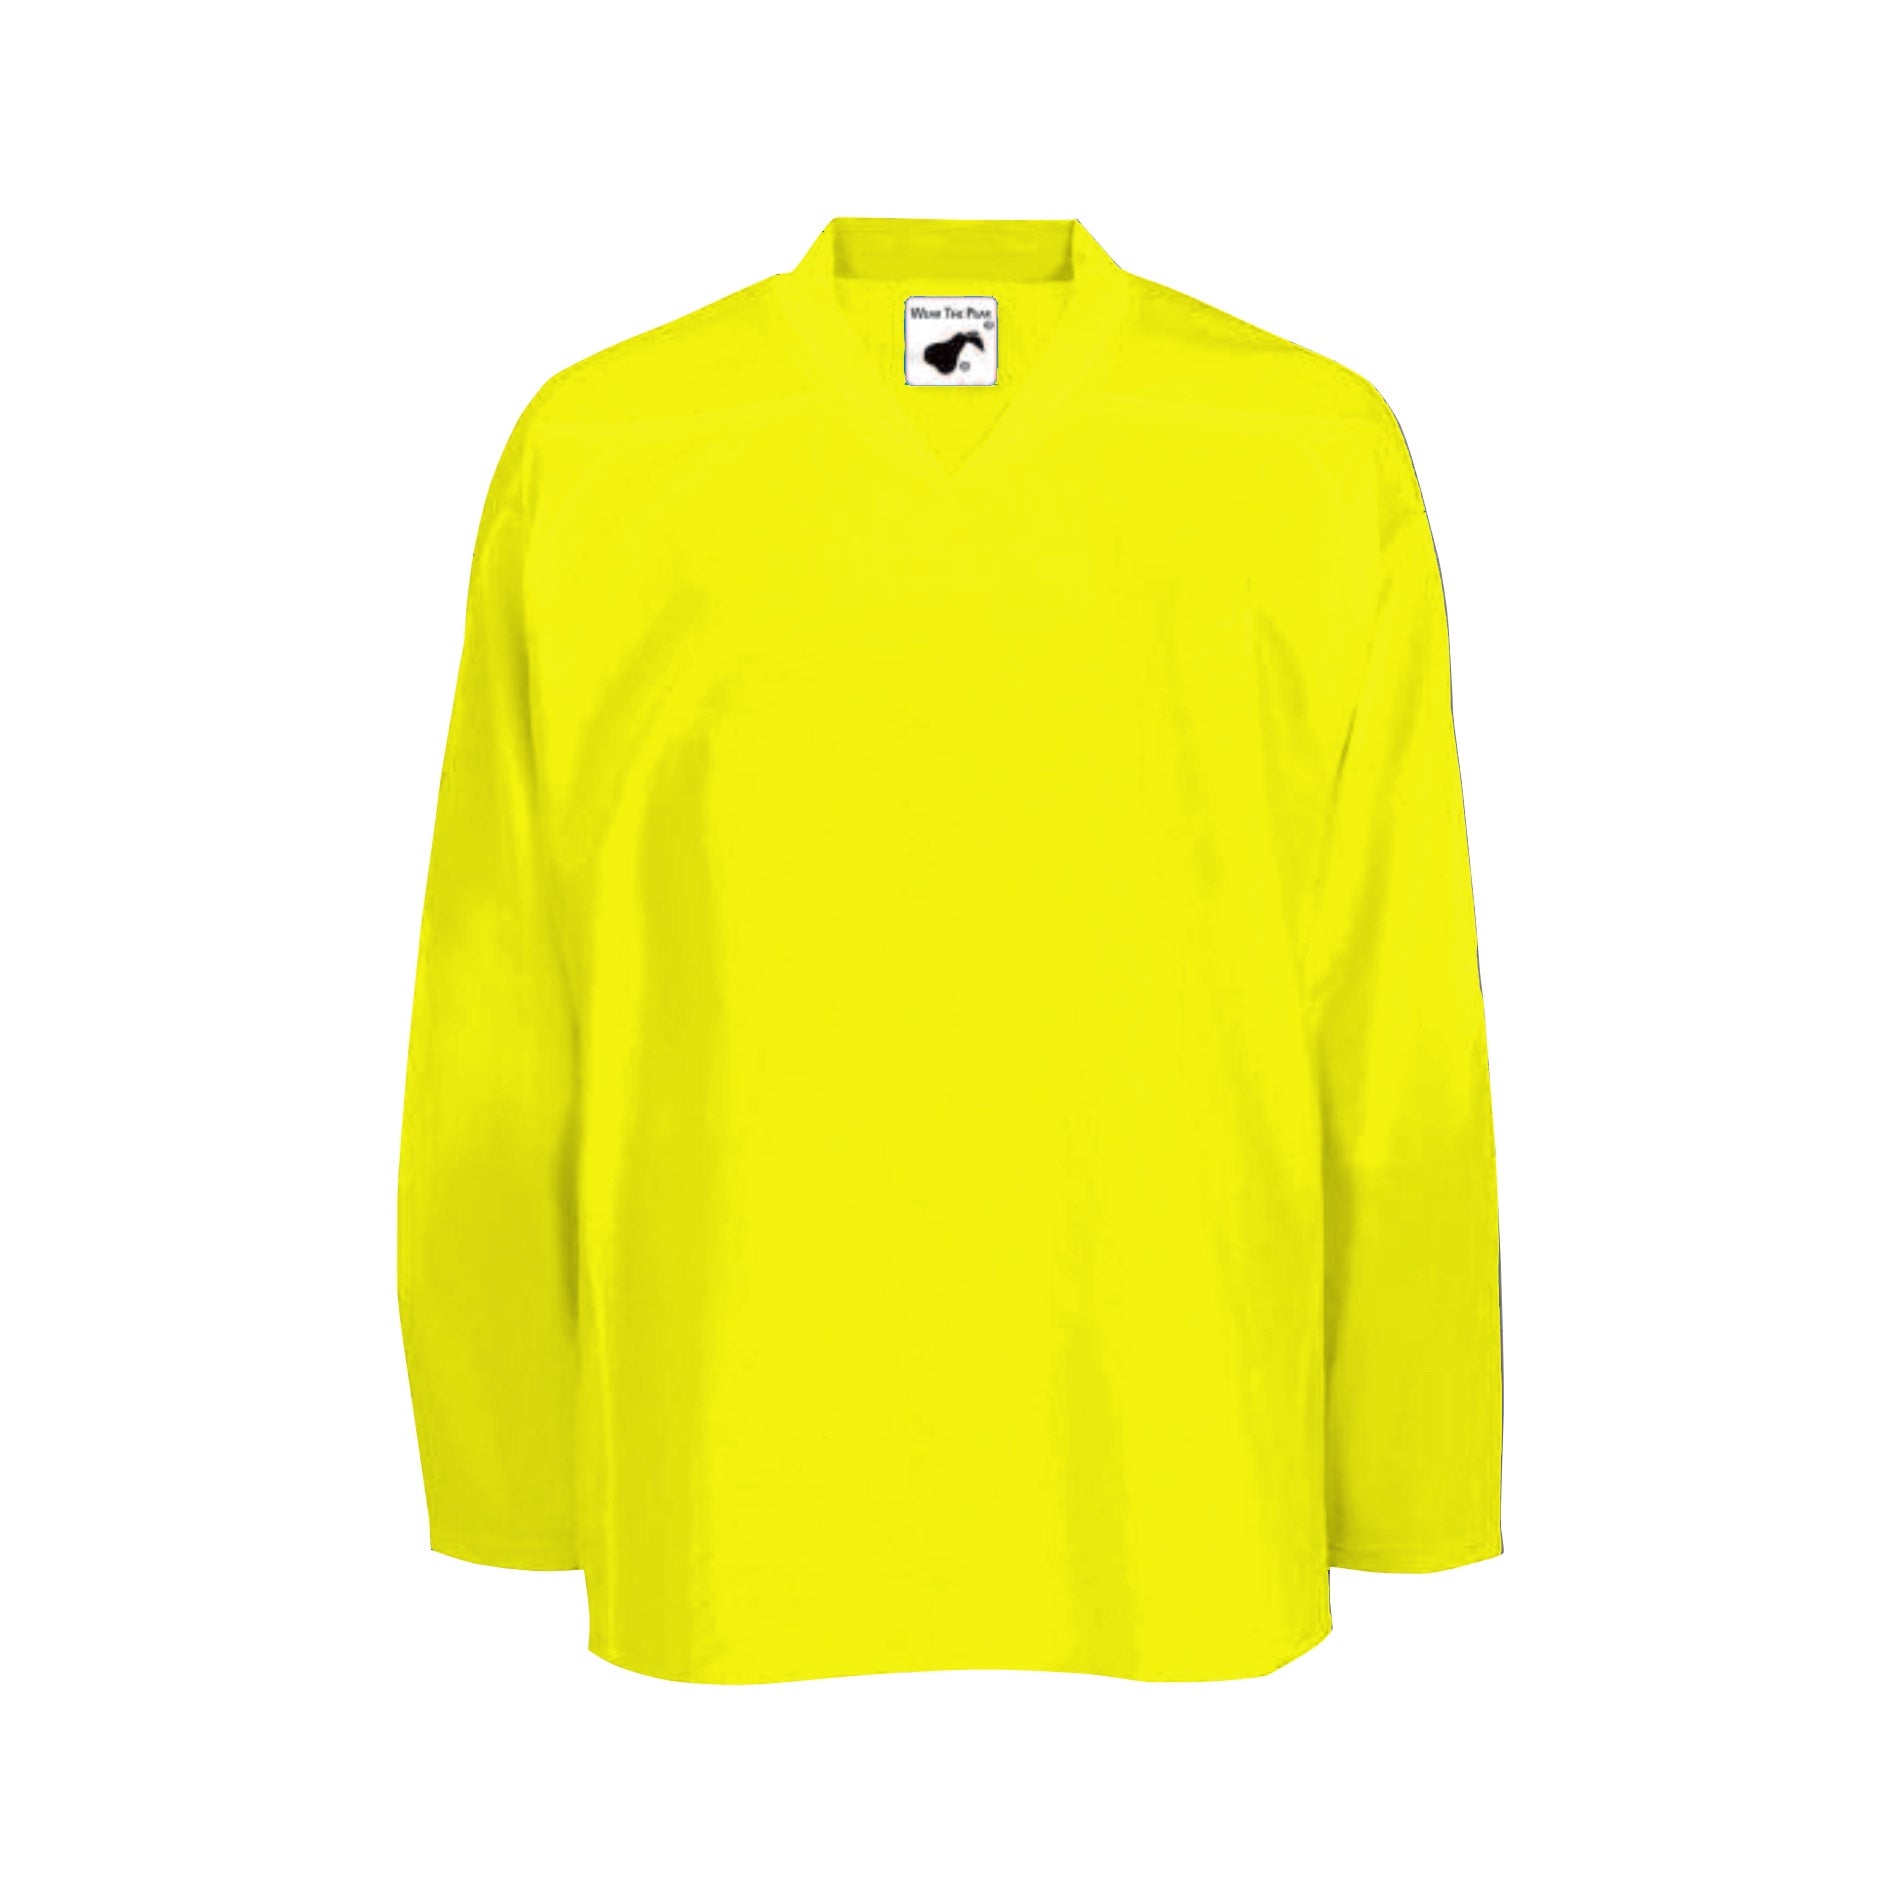 Nike Sarnia Sting Hockey Jersey Yellow Size XL